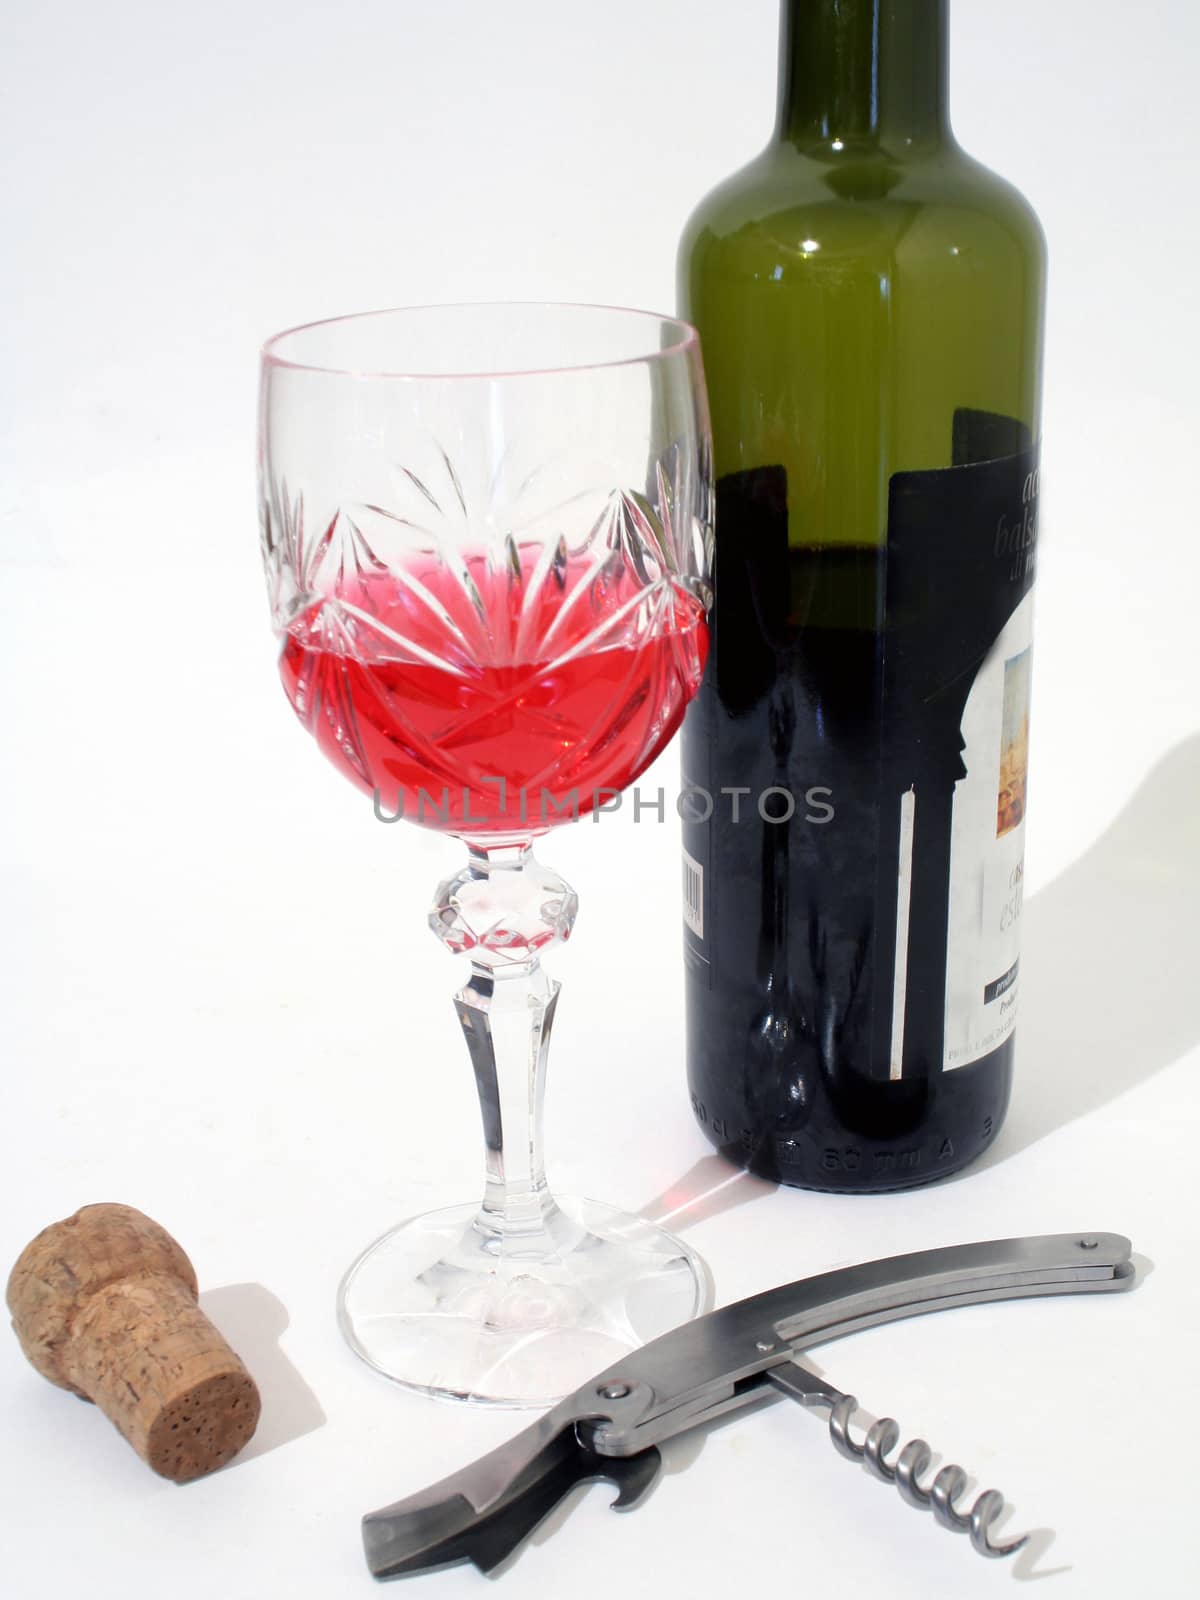 Lets Drink Some Wine by komradok